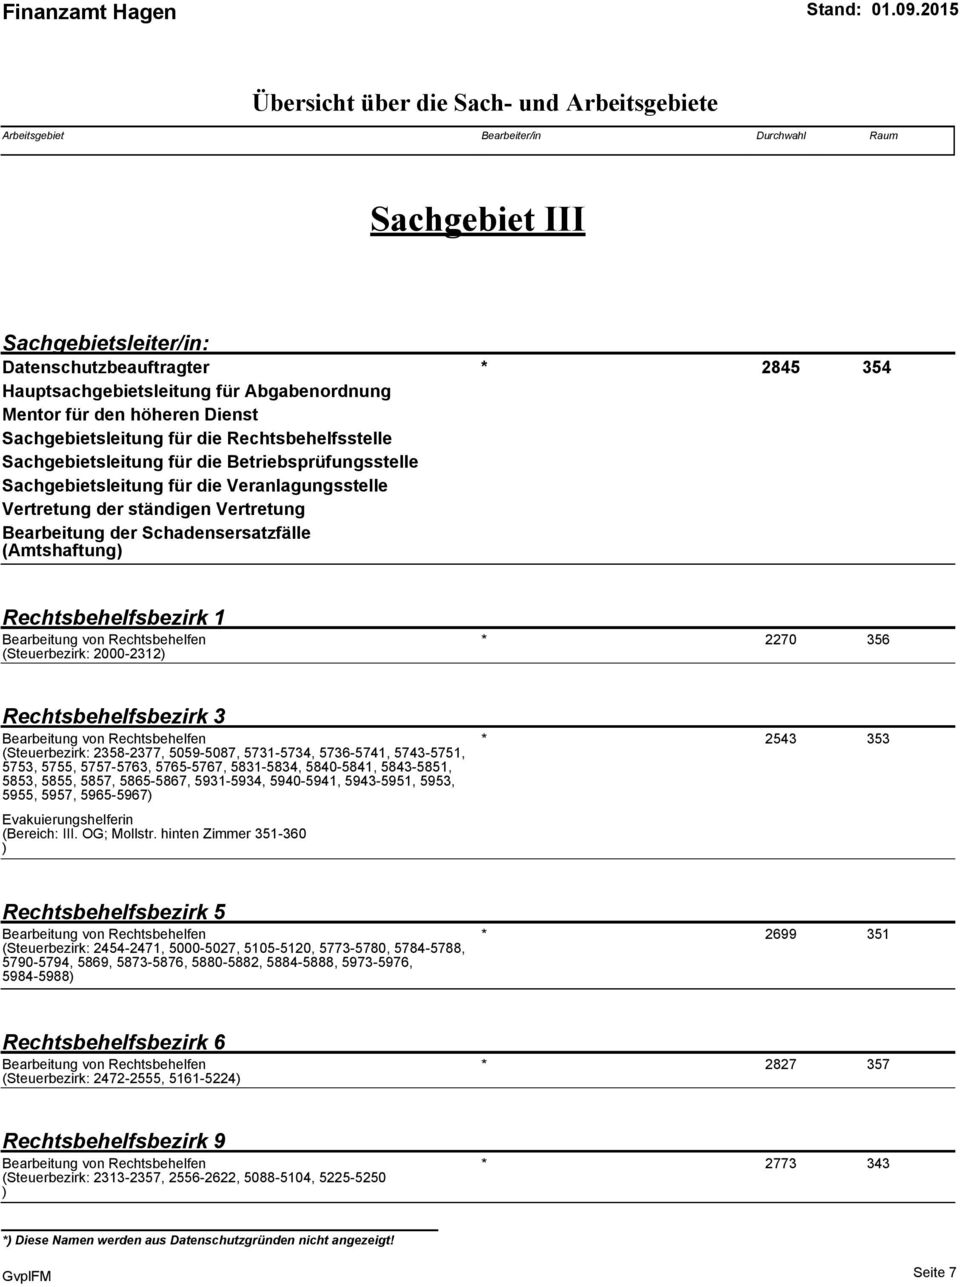 Rechtsbehelfsbezirk 1 Bearbeitung von Rechtsbehelfen (Steuerbezirk: 2000-2312) * (0.